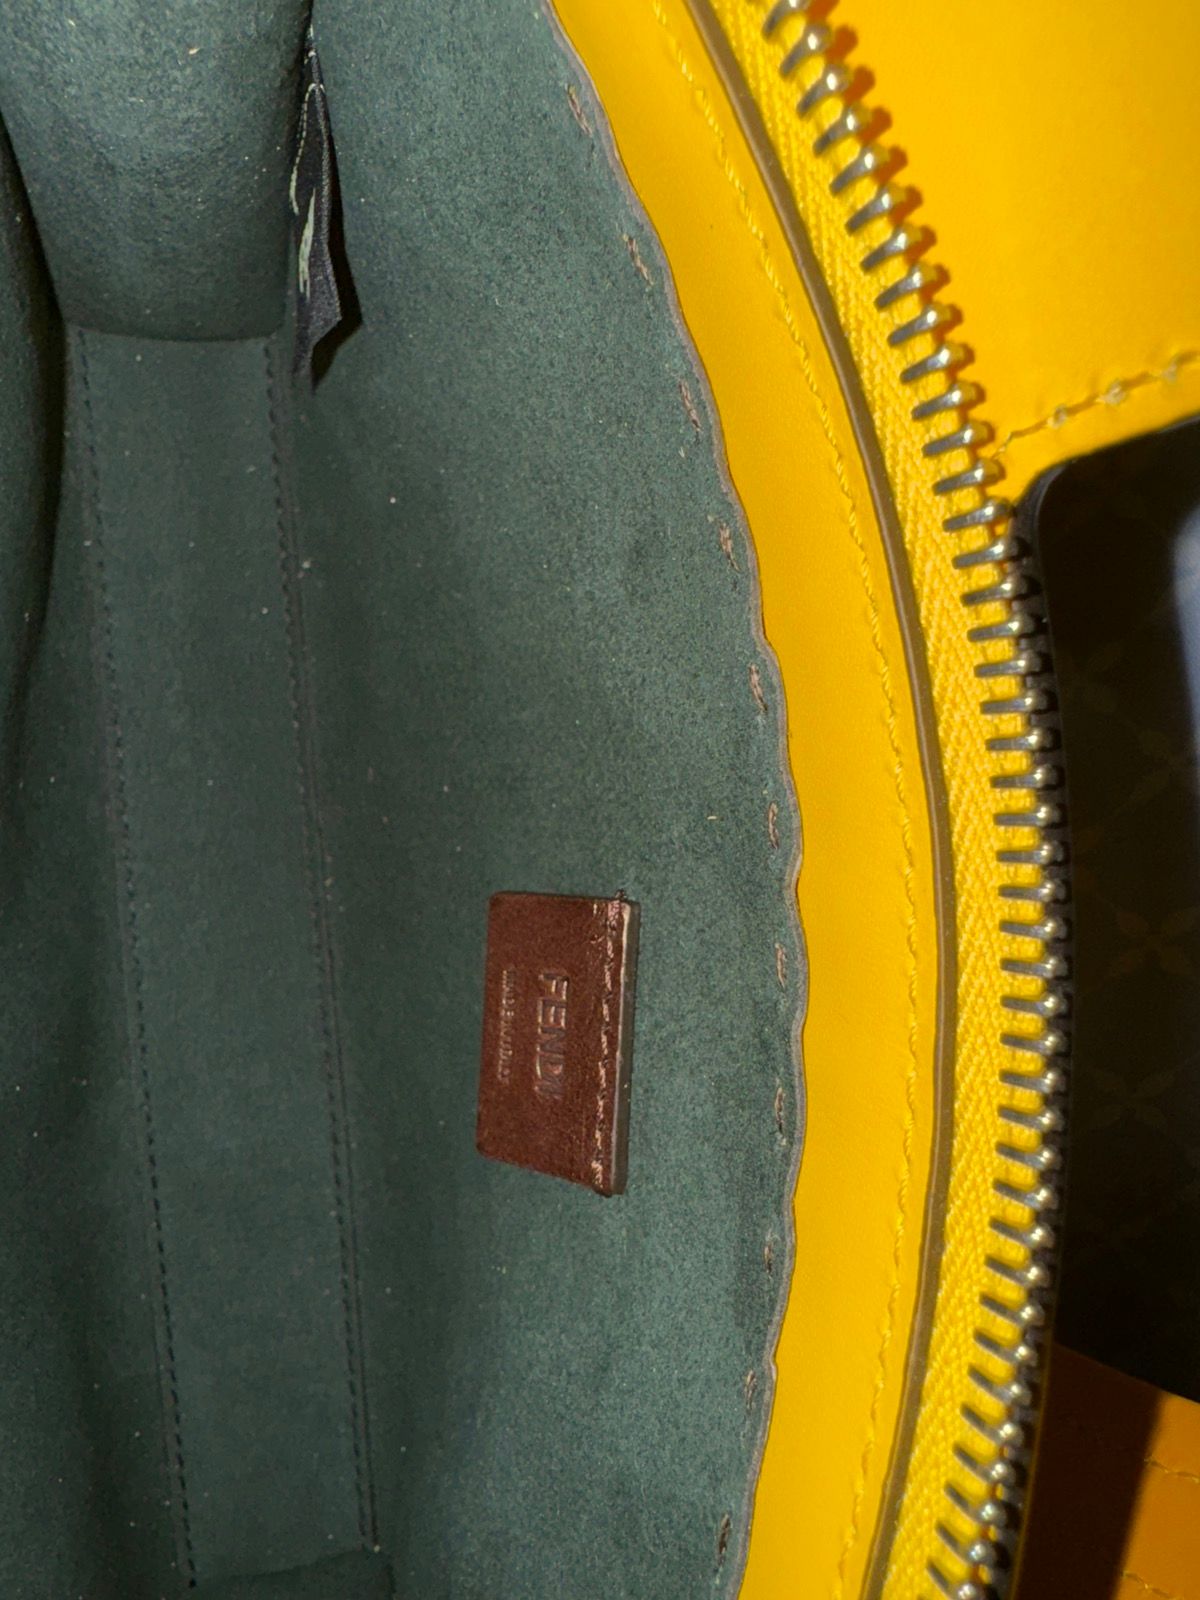 FENDI MAN'S YELLOW LEATHER MINI SHOPPER BAG WITH LOGO - 17